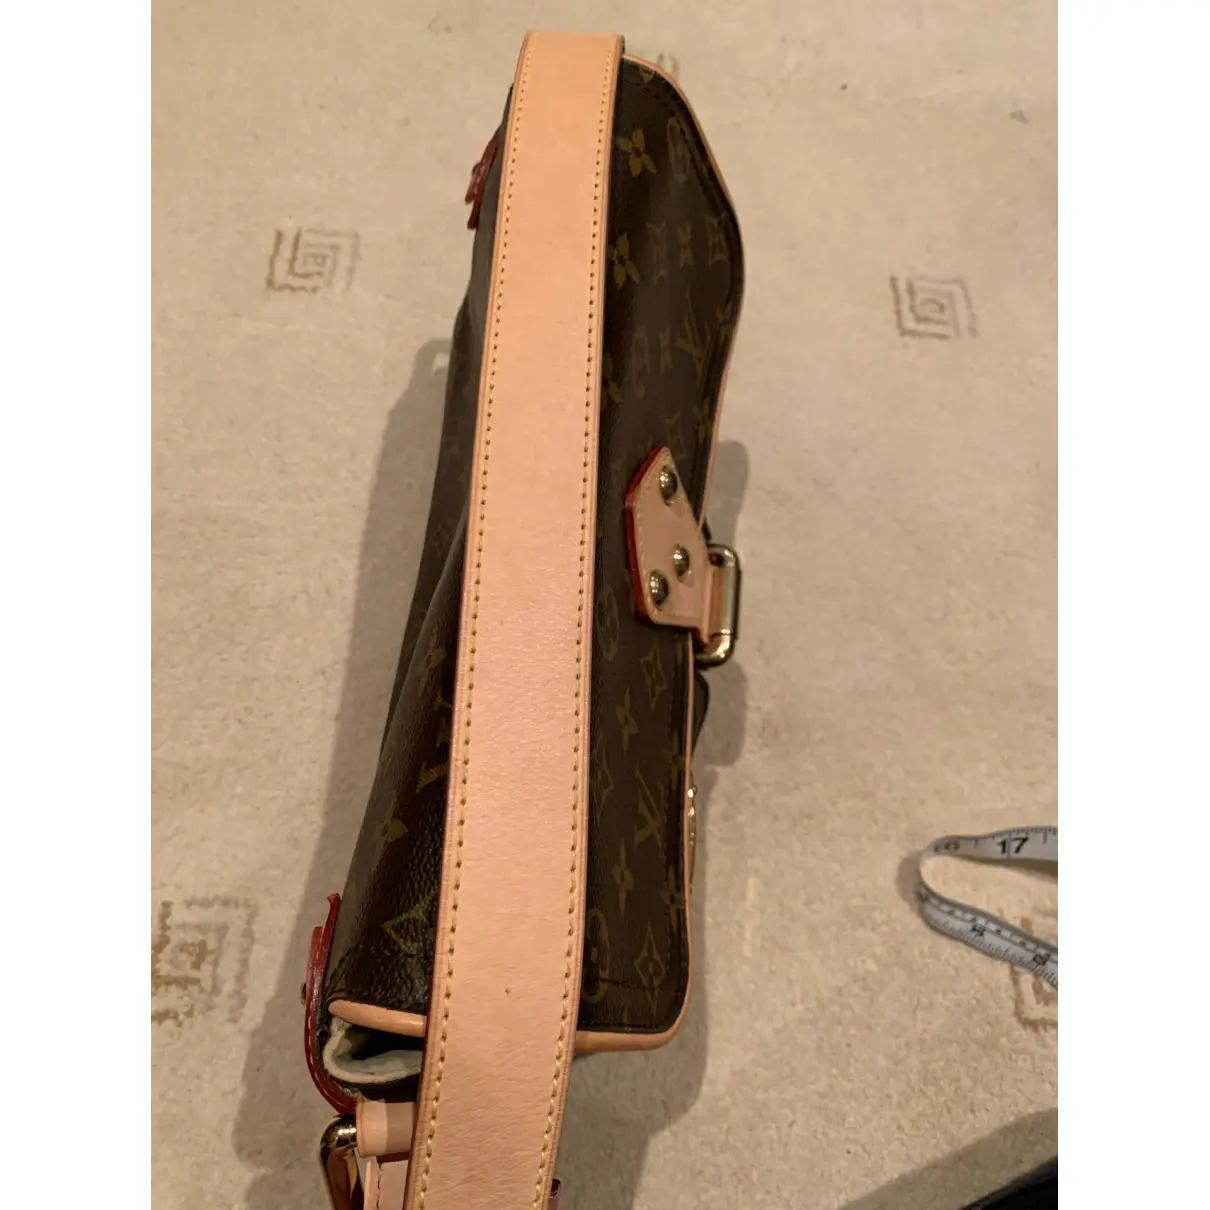 Hudson leather handbag Louis Vuitton